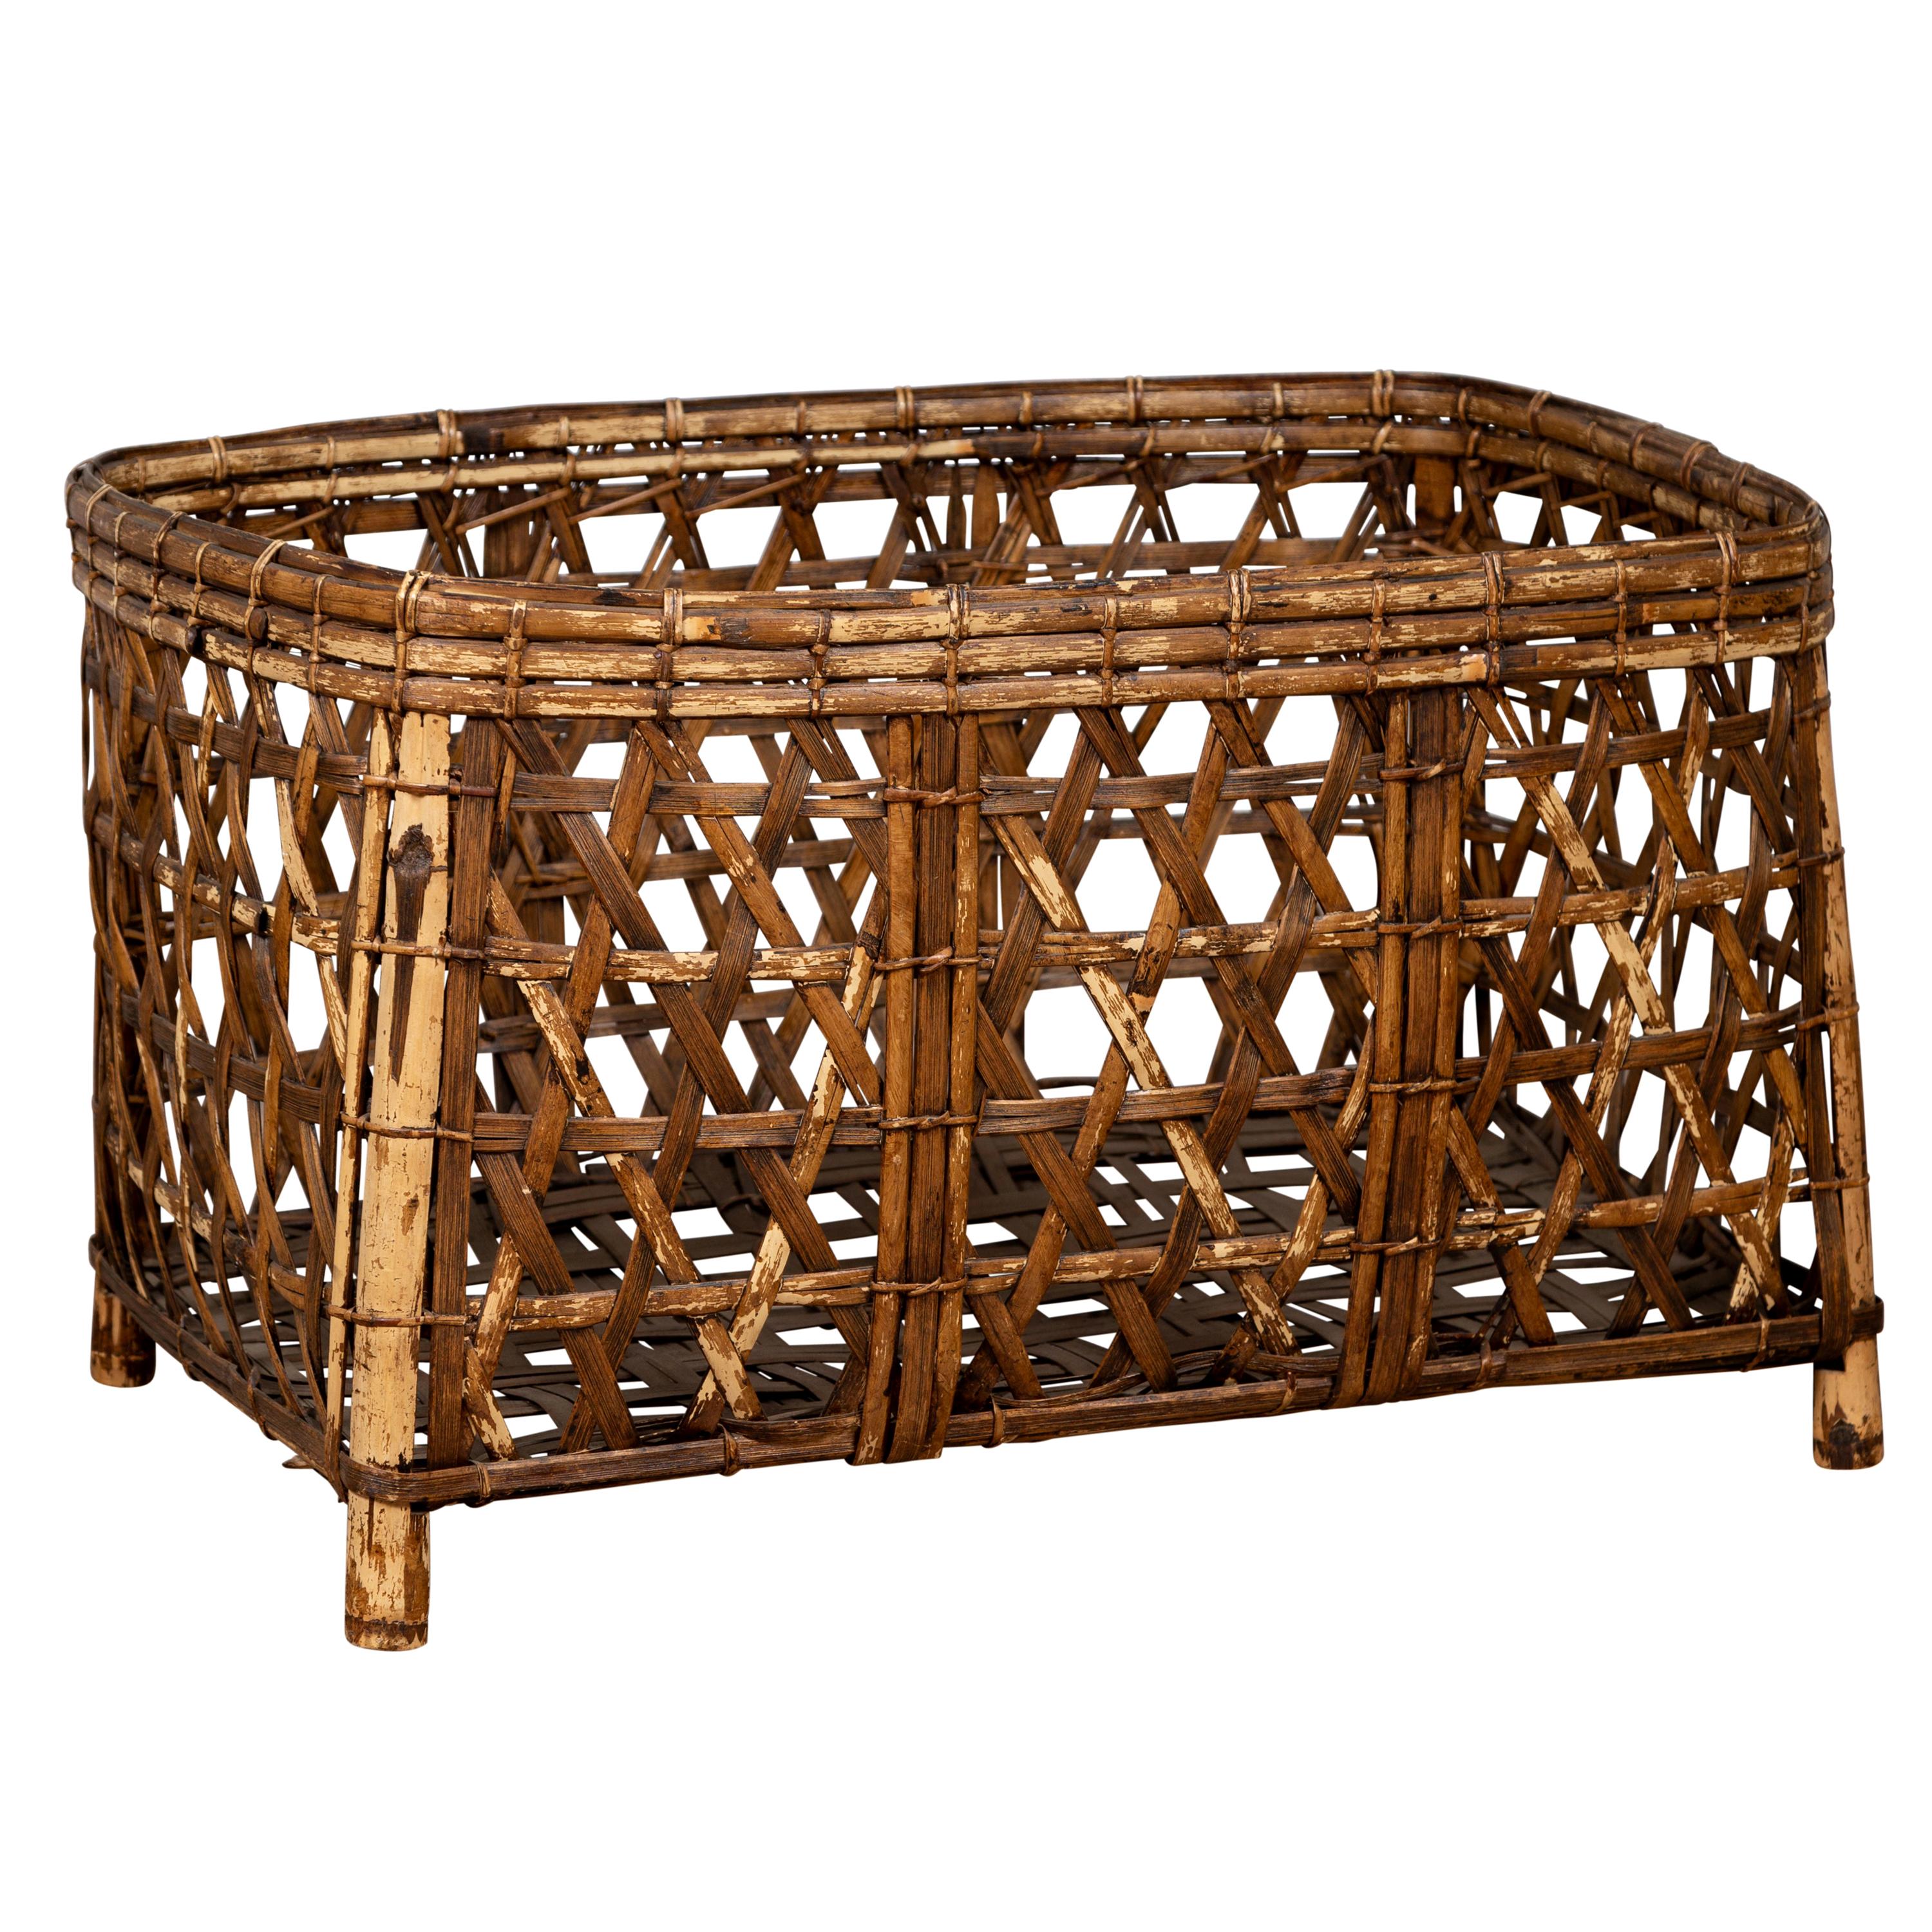 Large Vintage Thai Bamboo Fretwork Basket Raised on Short Feet, circa 1950